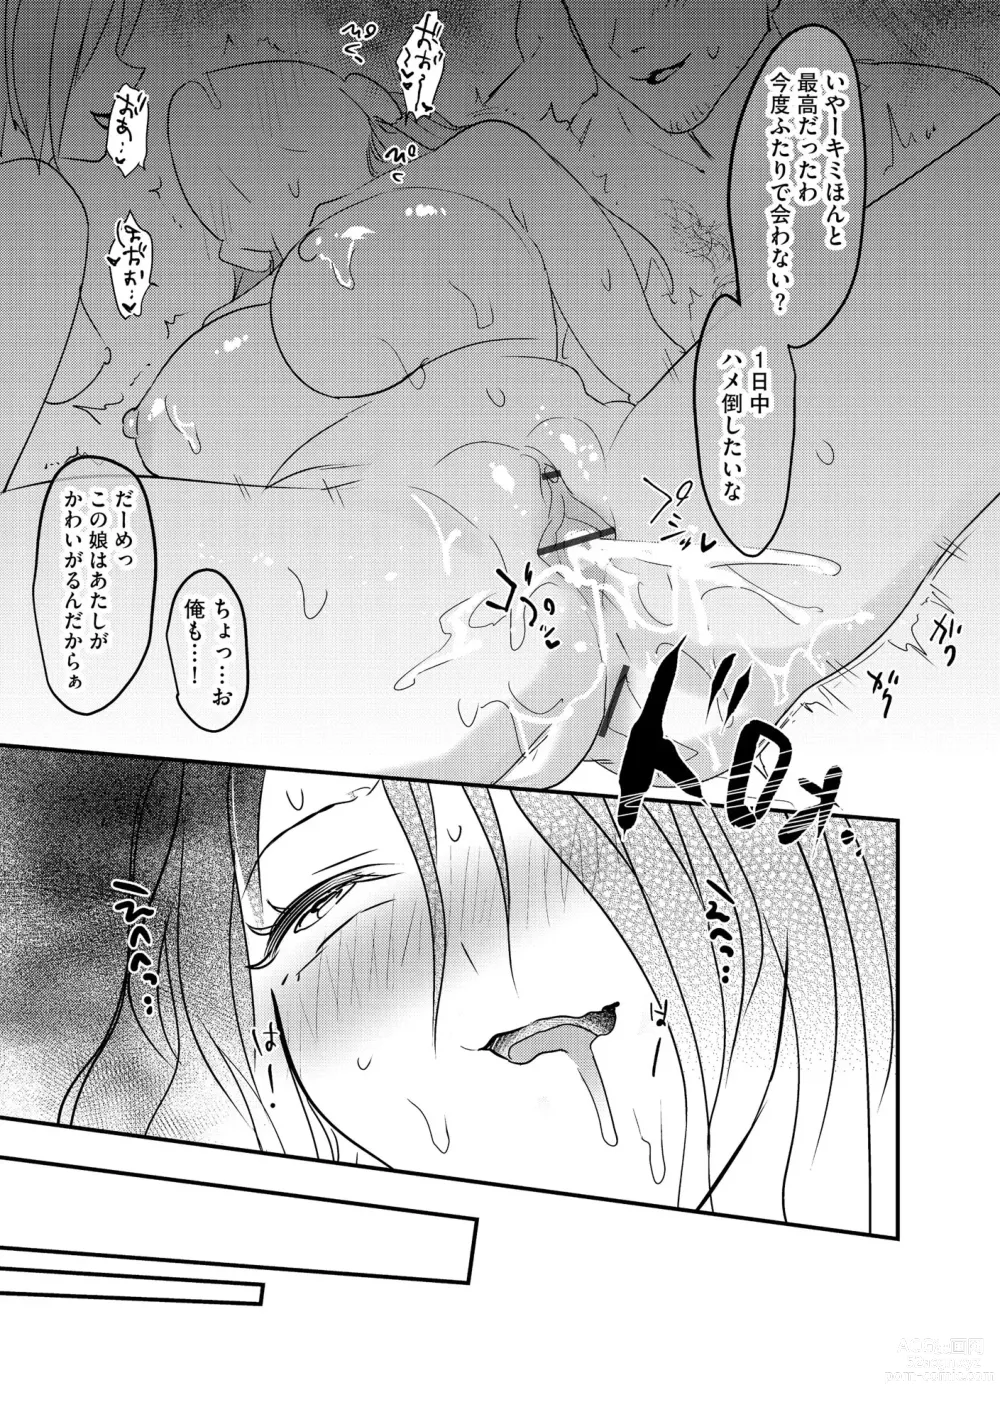 Page 23 of manga Cyberia Plus Vol. 14